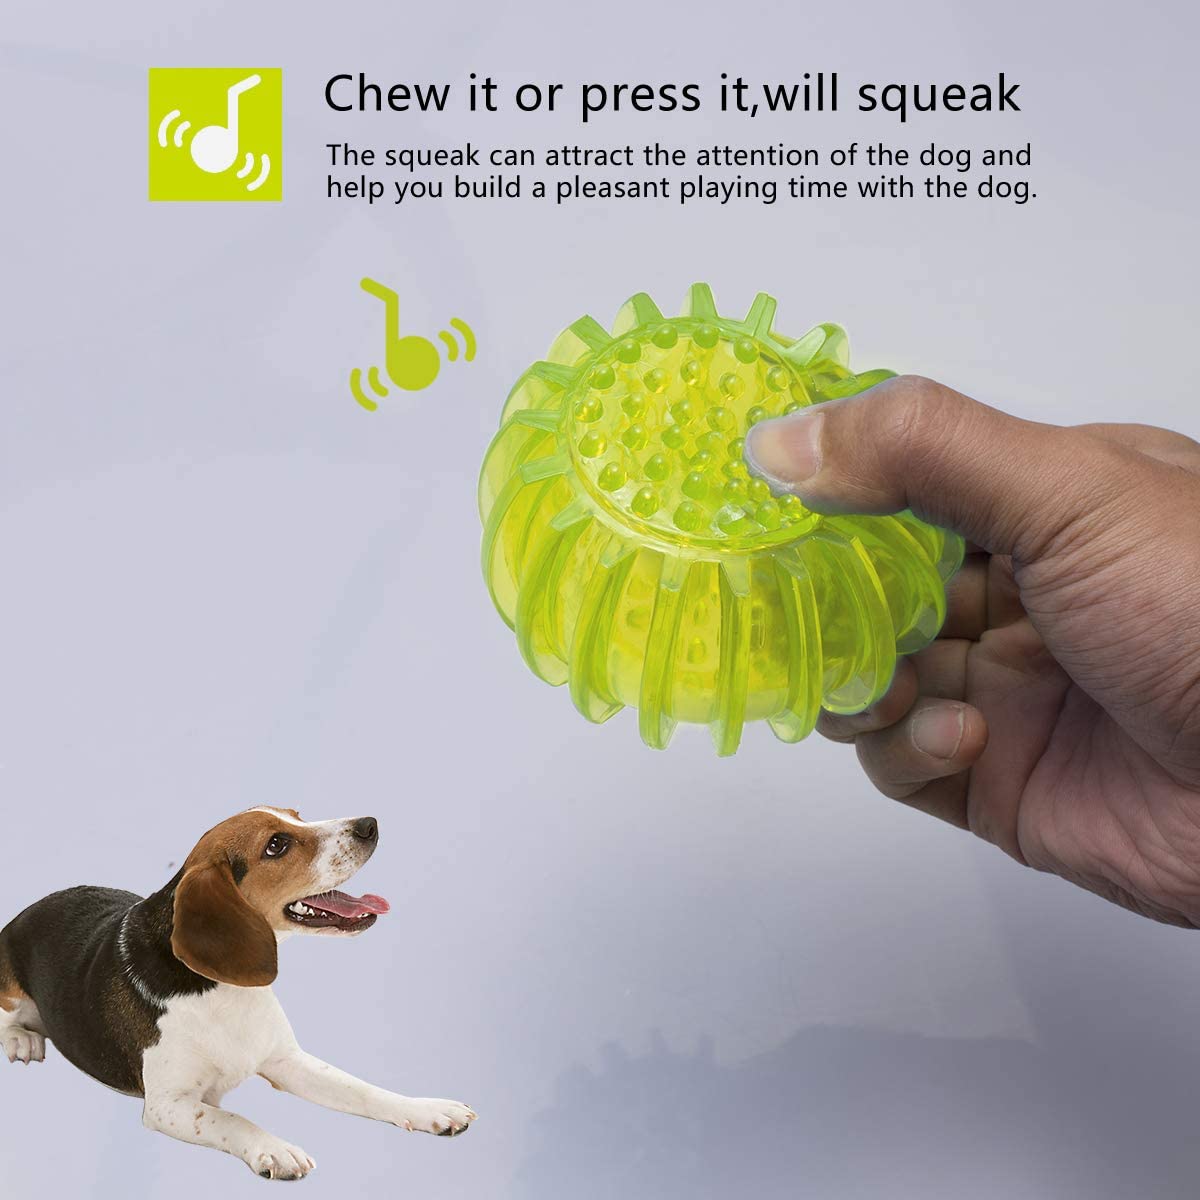  Petper Cw-0049EU - Juguete de pelota para perros, juguete de pelota con sonido para mascotas (amarillo) 